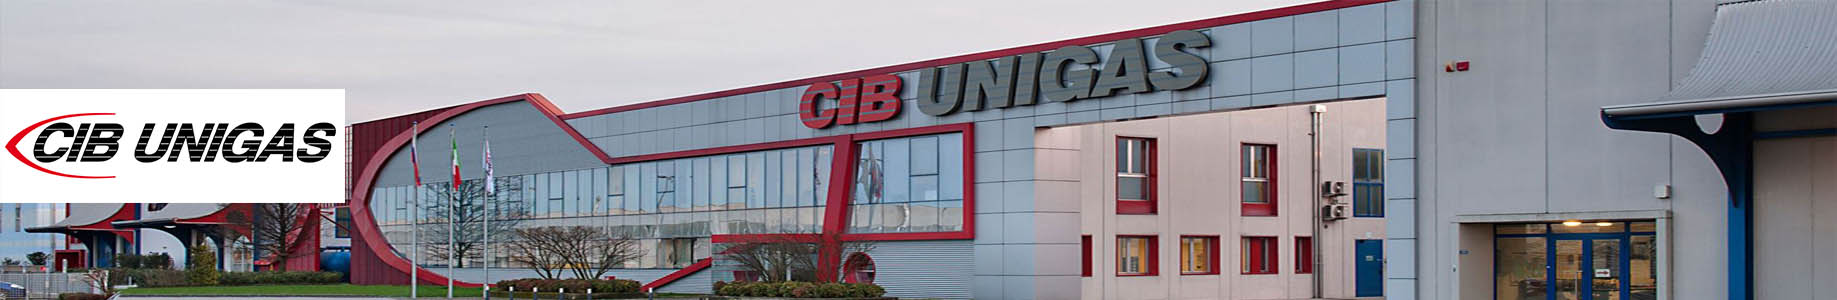 cib_unigas_1 Запчасти для горелок CIB UNIGAS (Чиб Унигаз) купить в ООО МАРК